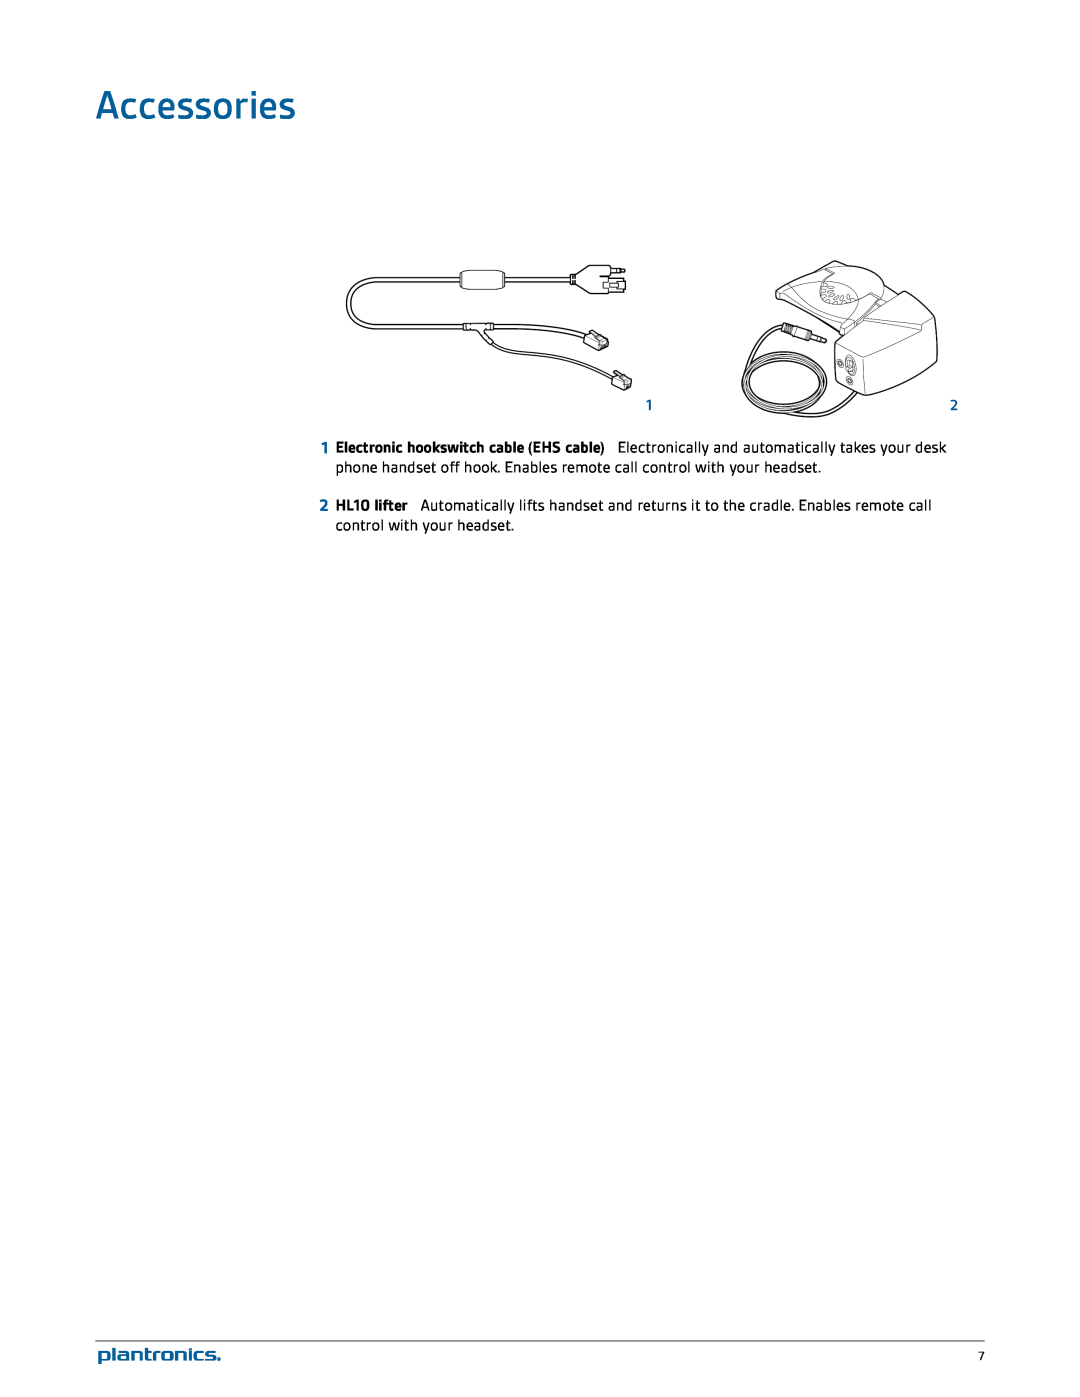 Plantronics W730 manual Accessories 